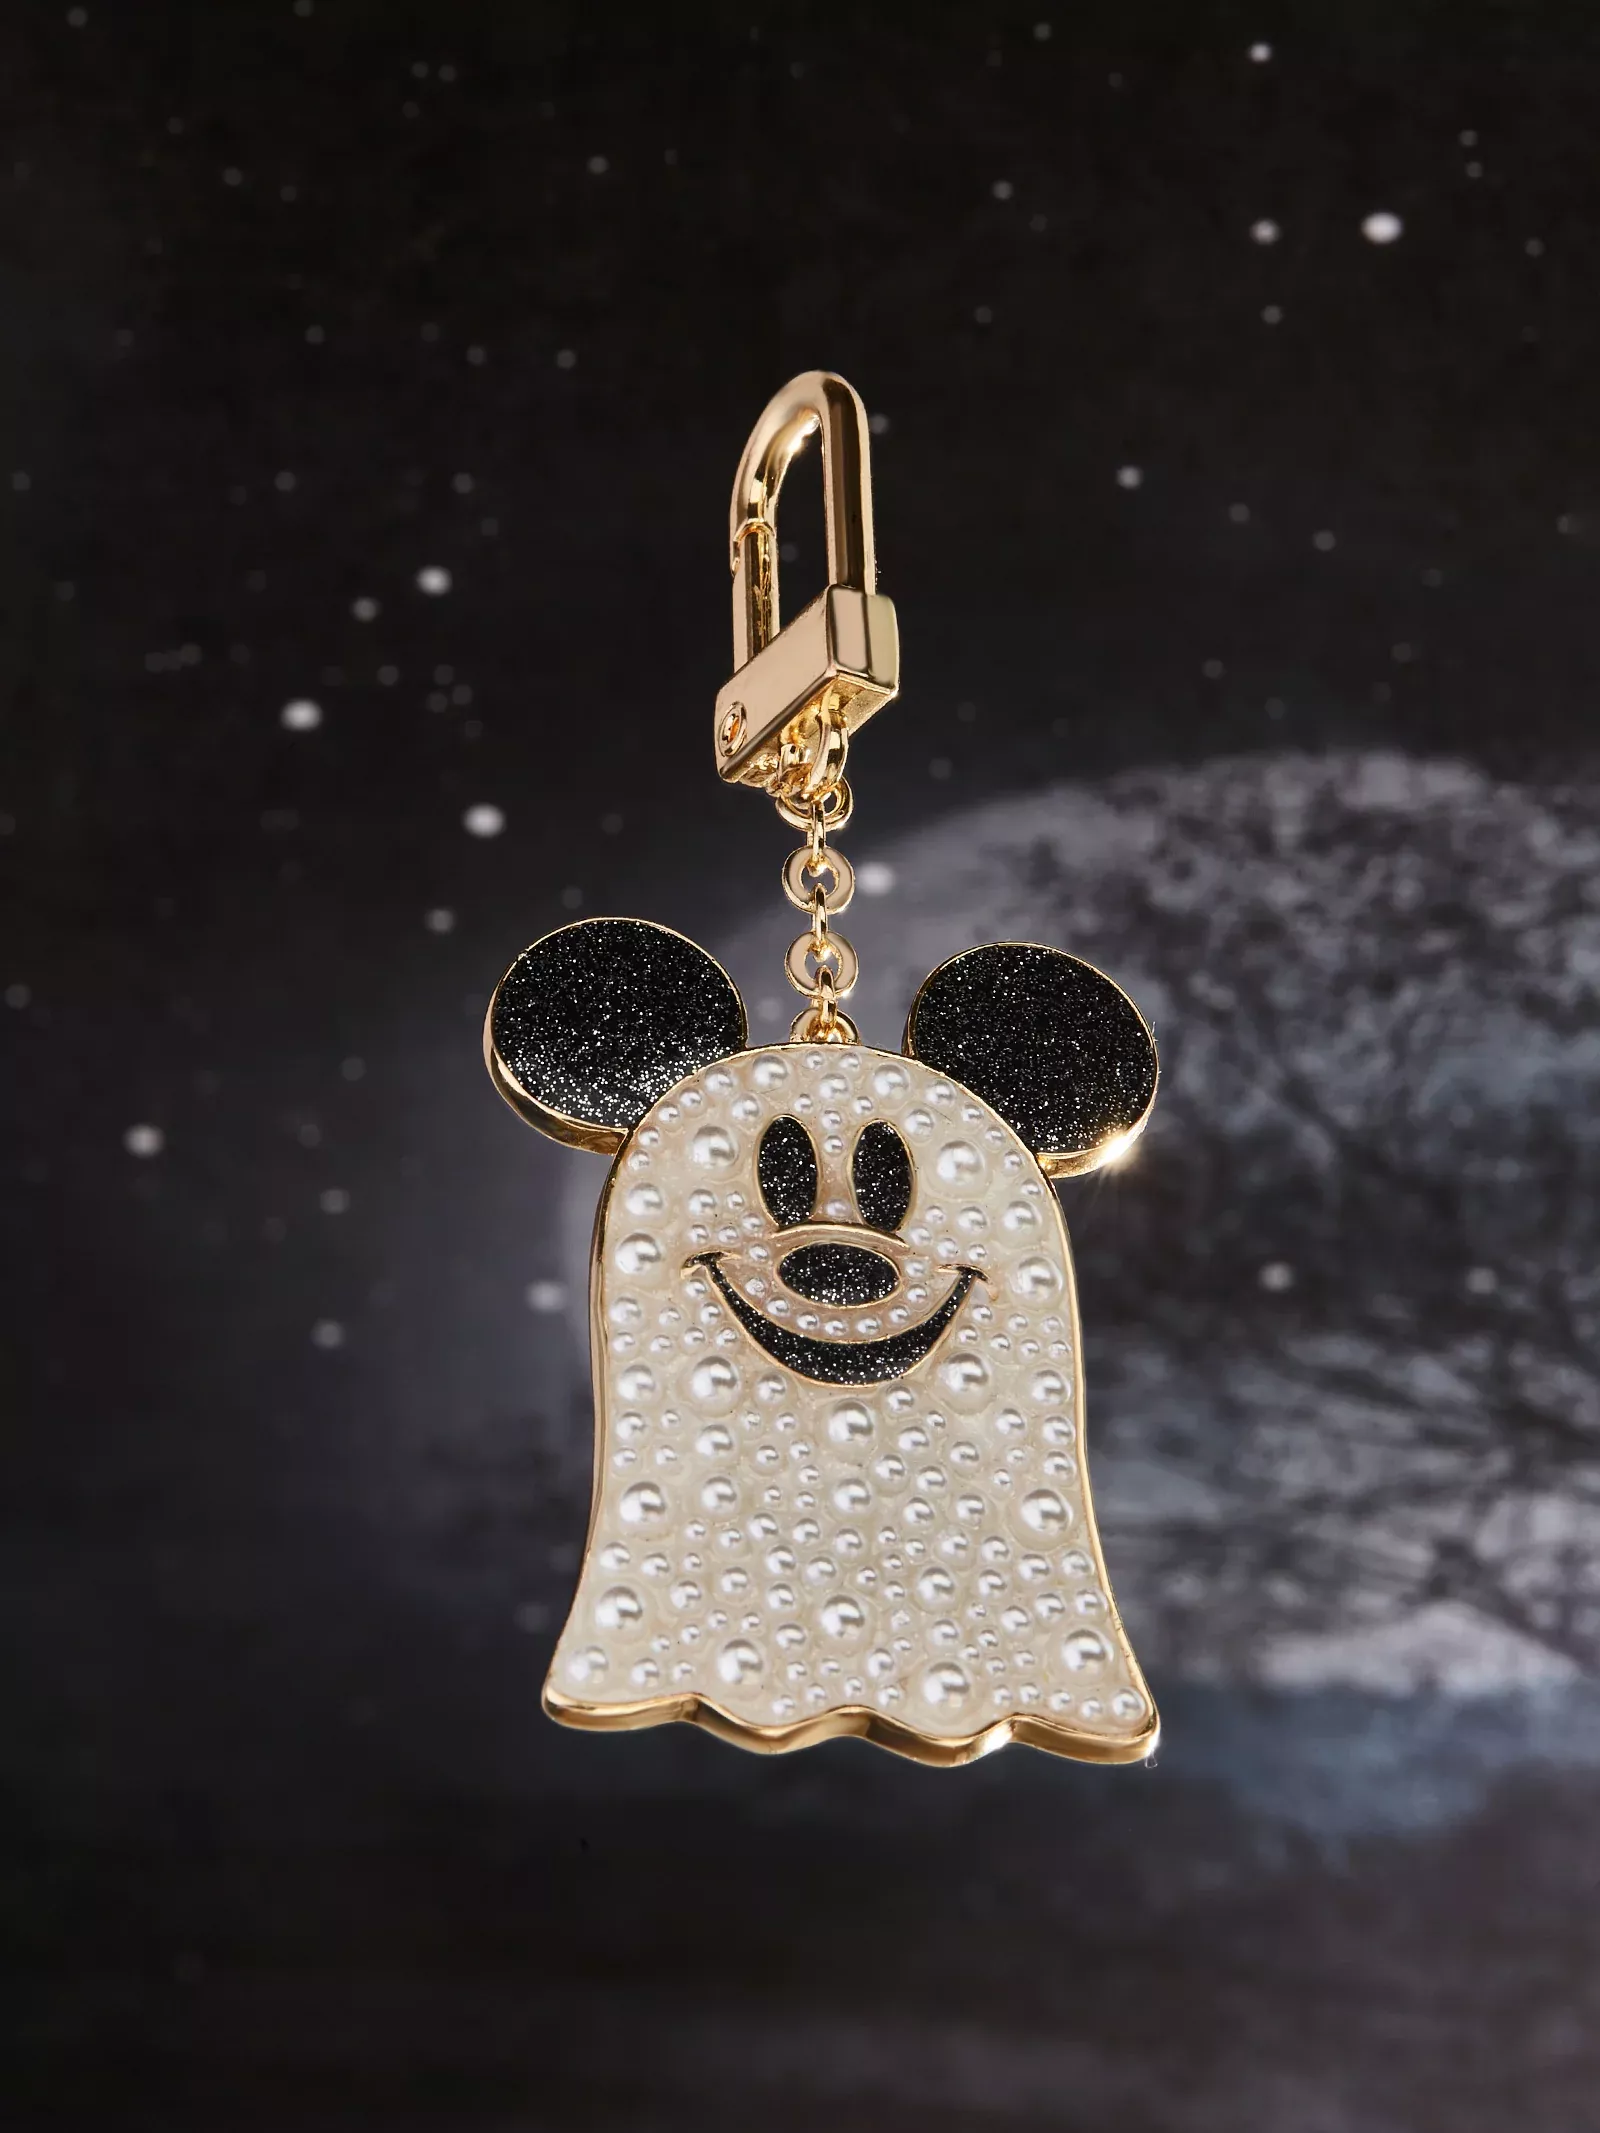 Minnie Mouse BaubleBar Candy Corn Keychain